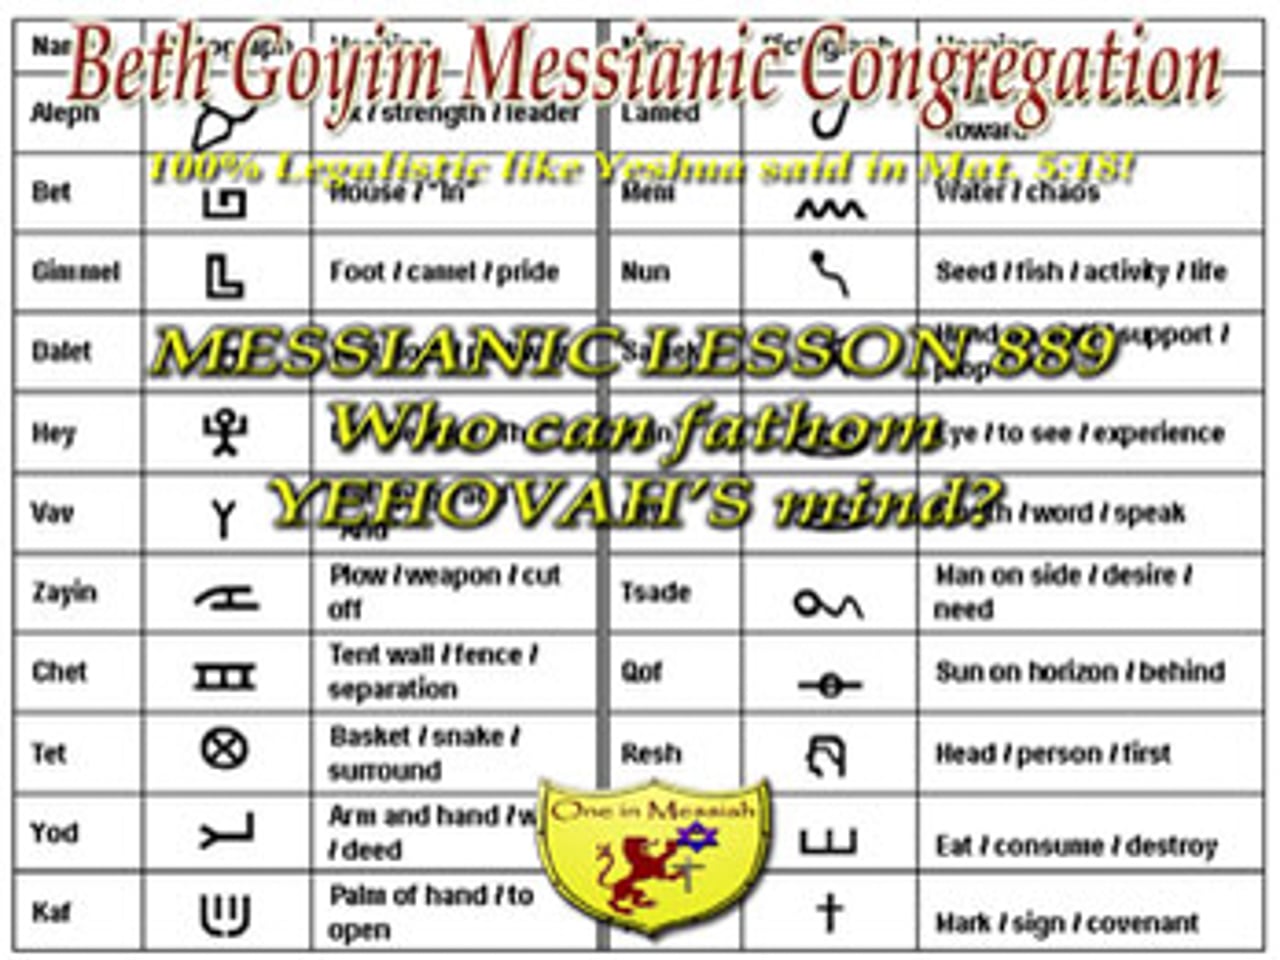 BGMCTV MESSIANIC LESSON 889 WHO CAN FATHOM